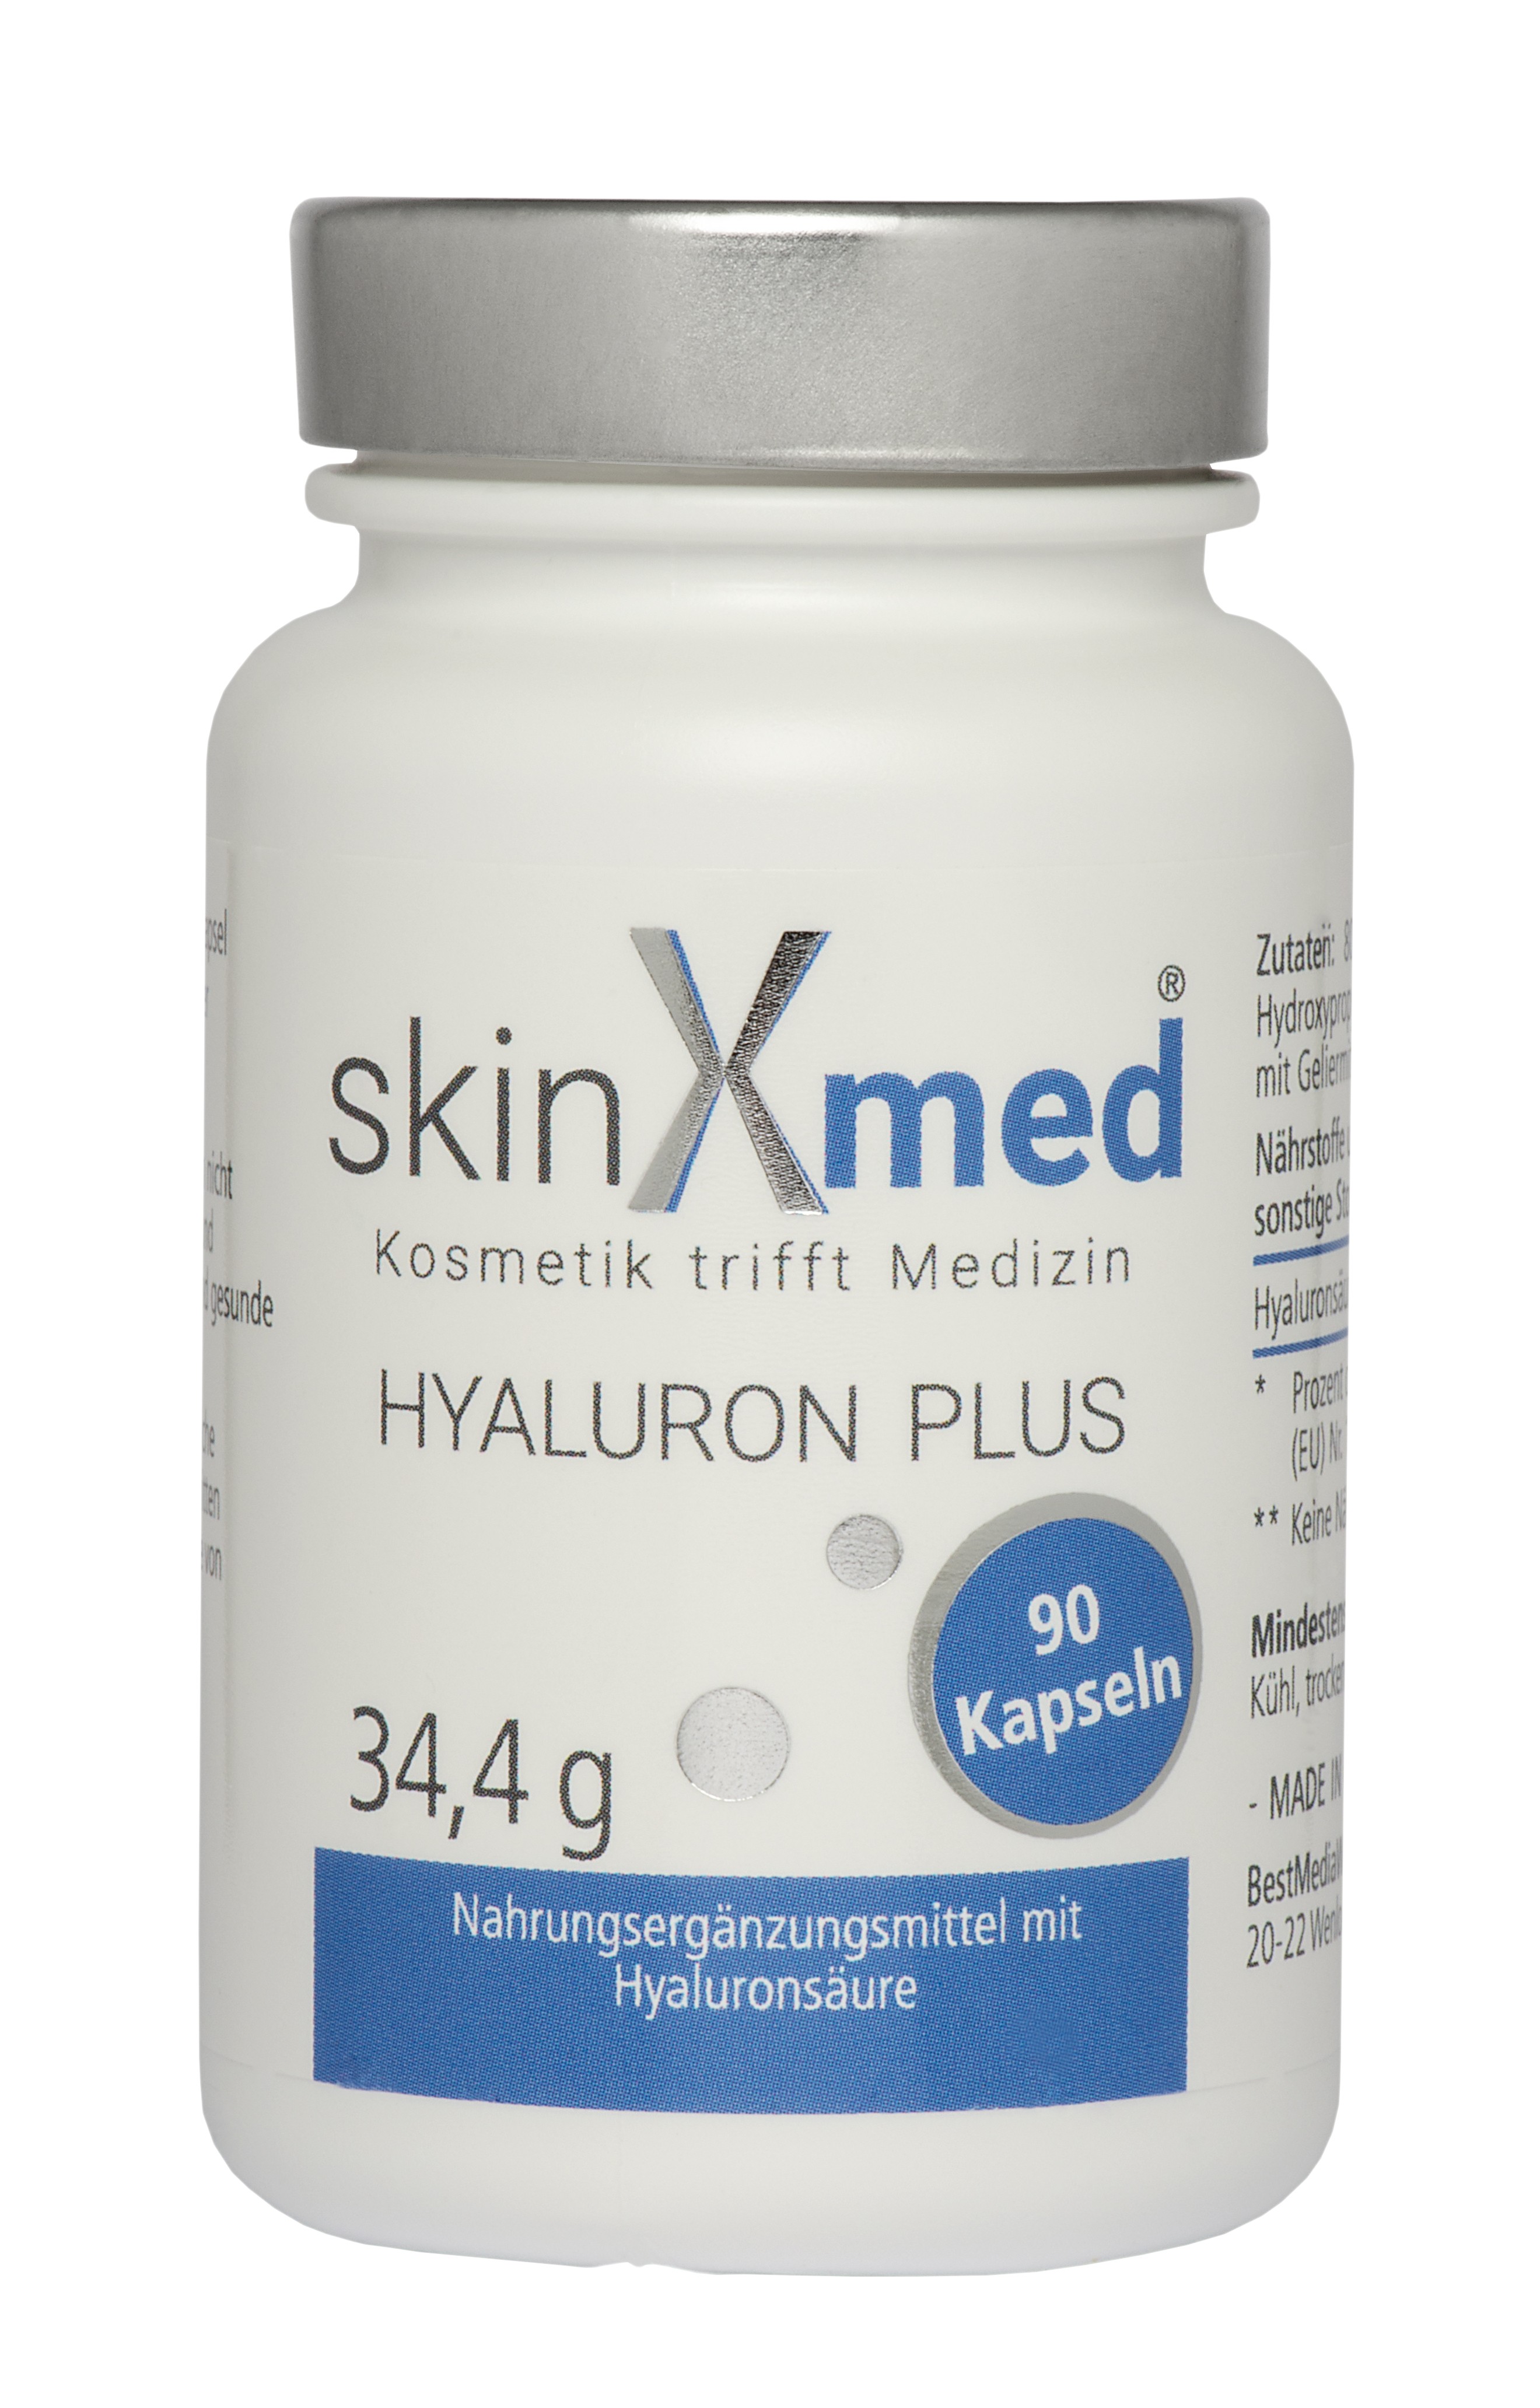 skinXmed – Hyaluron Plus Kapseln